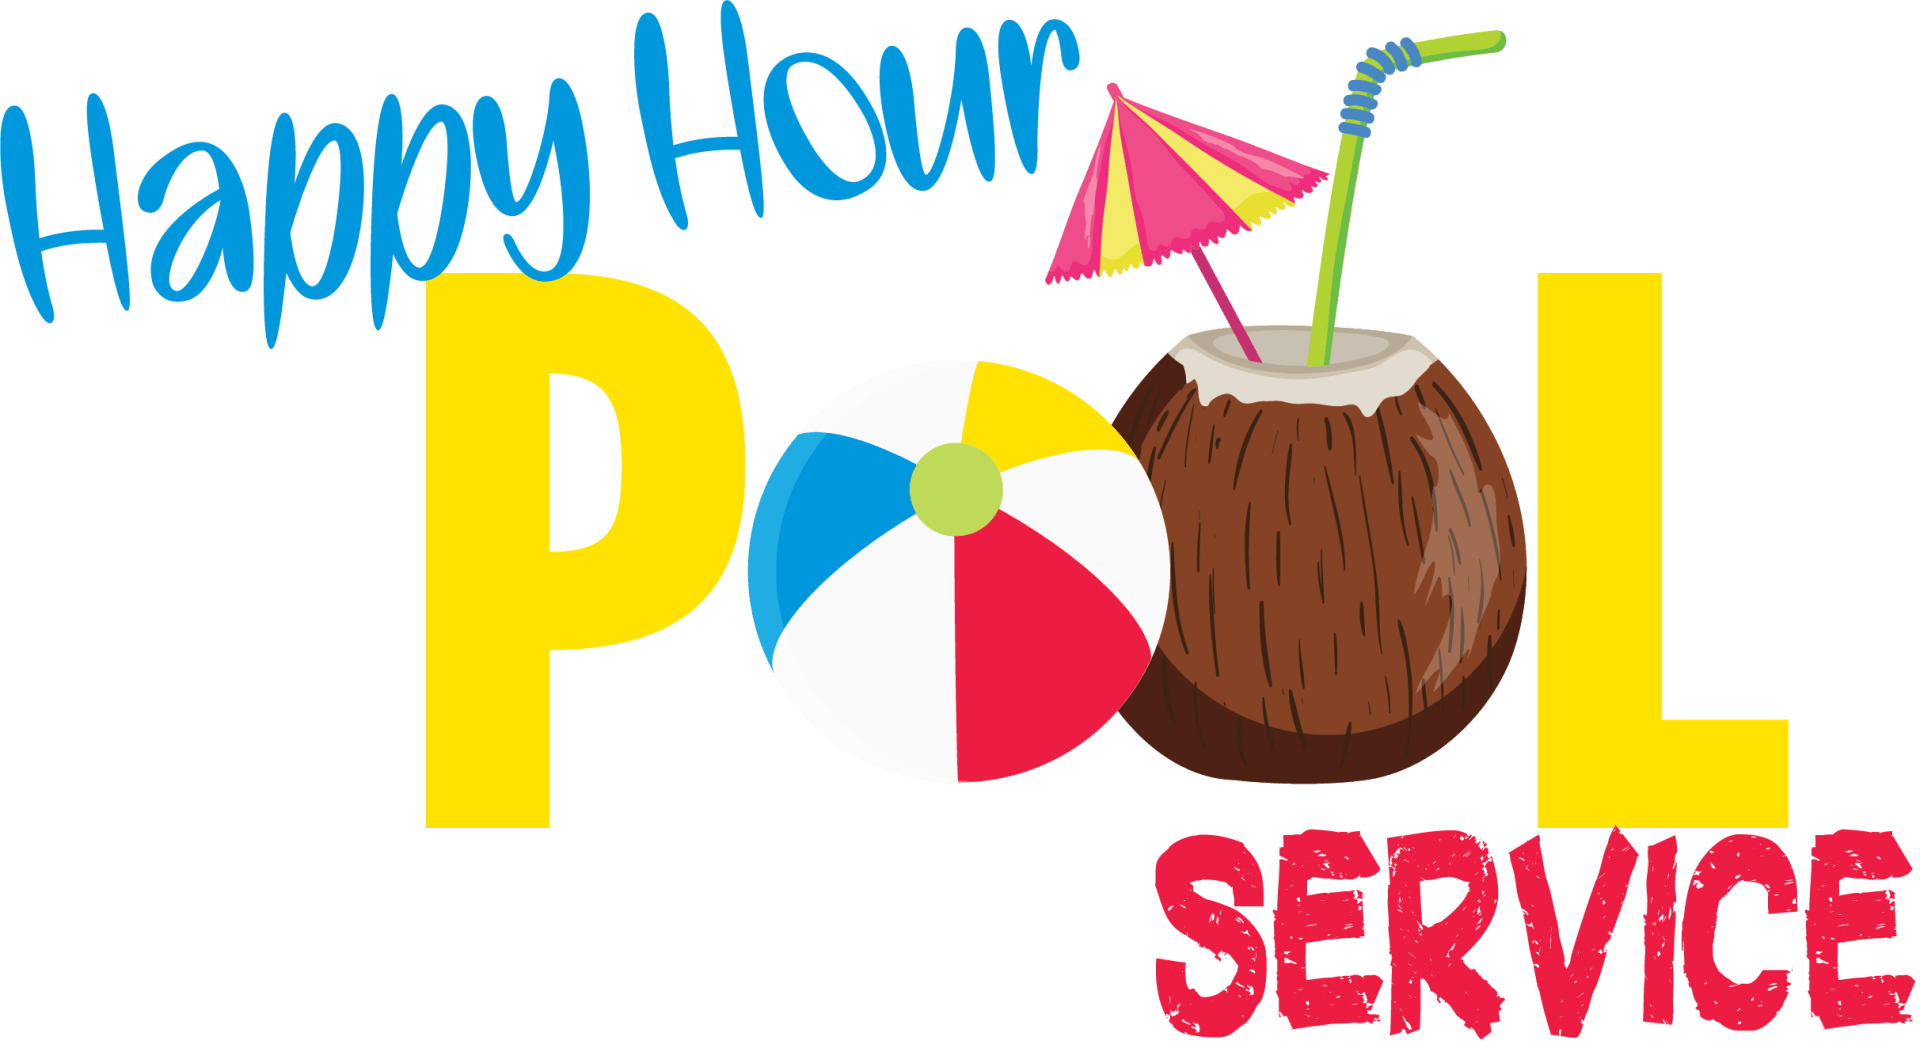 Happy Hour Pool Service Logo